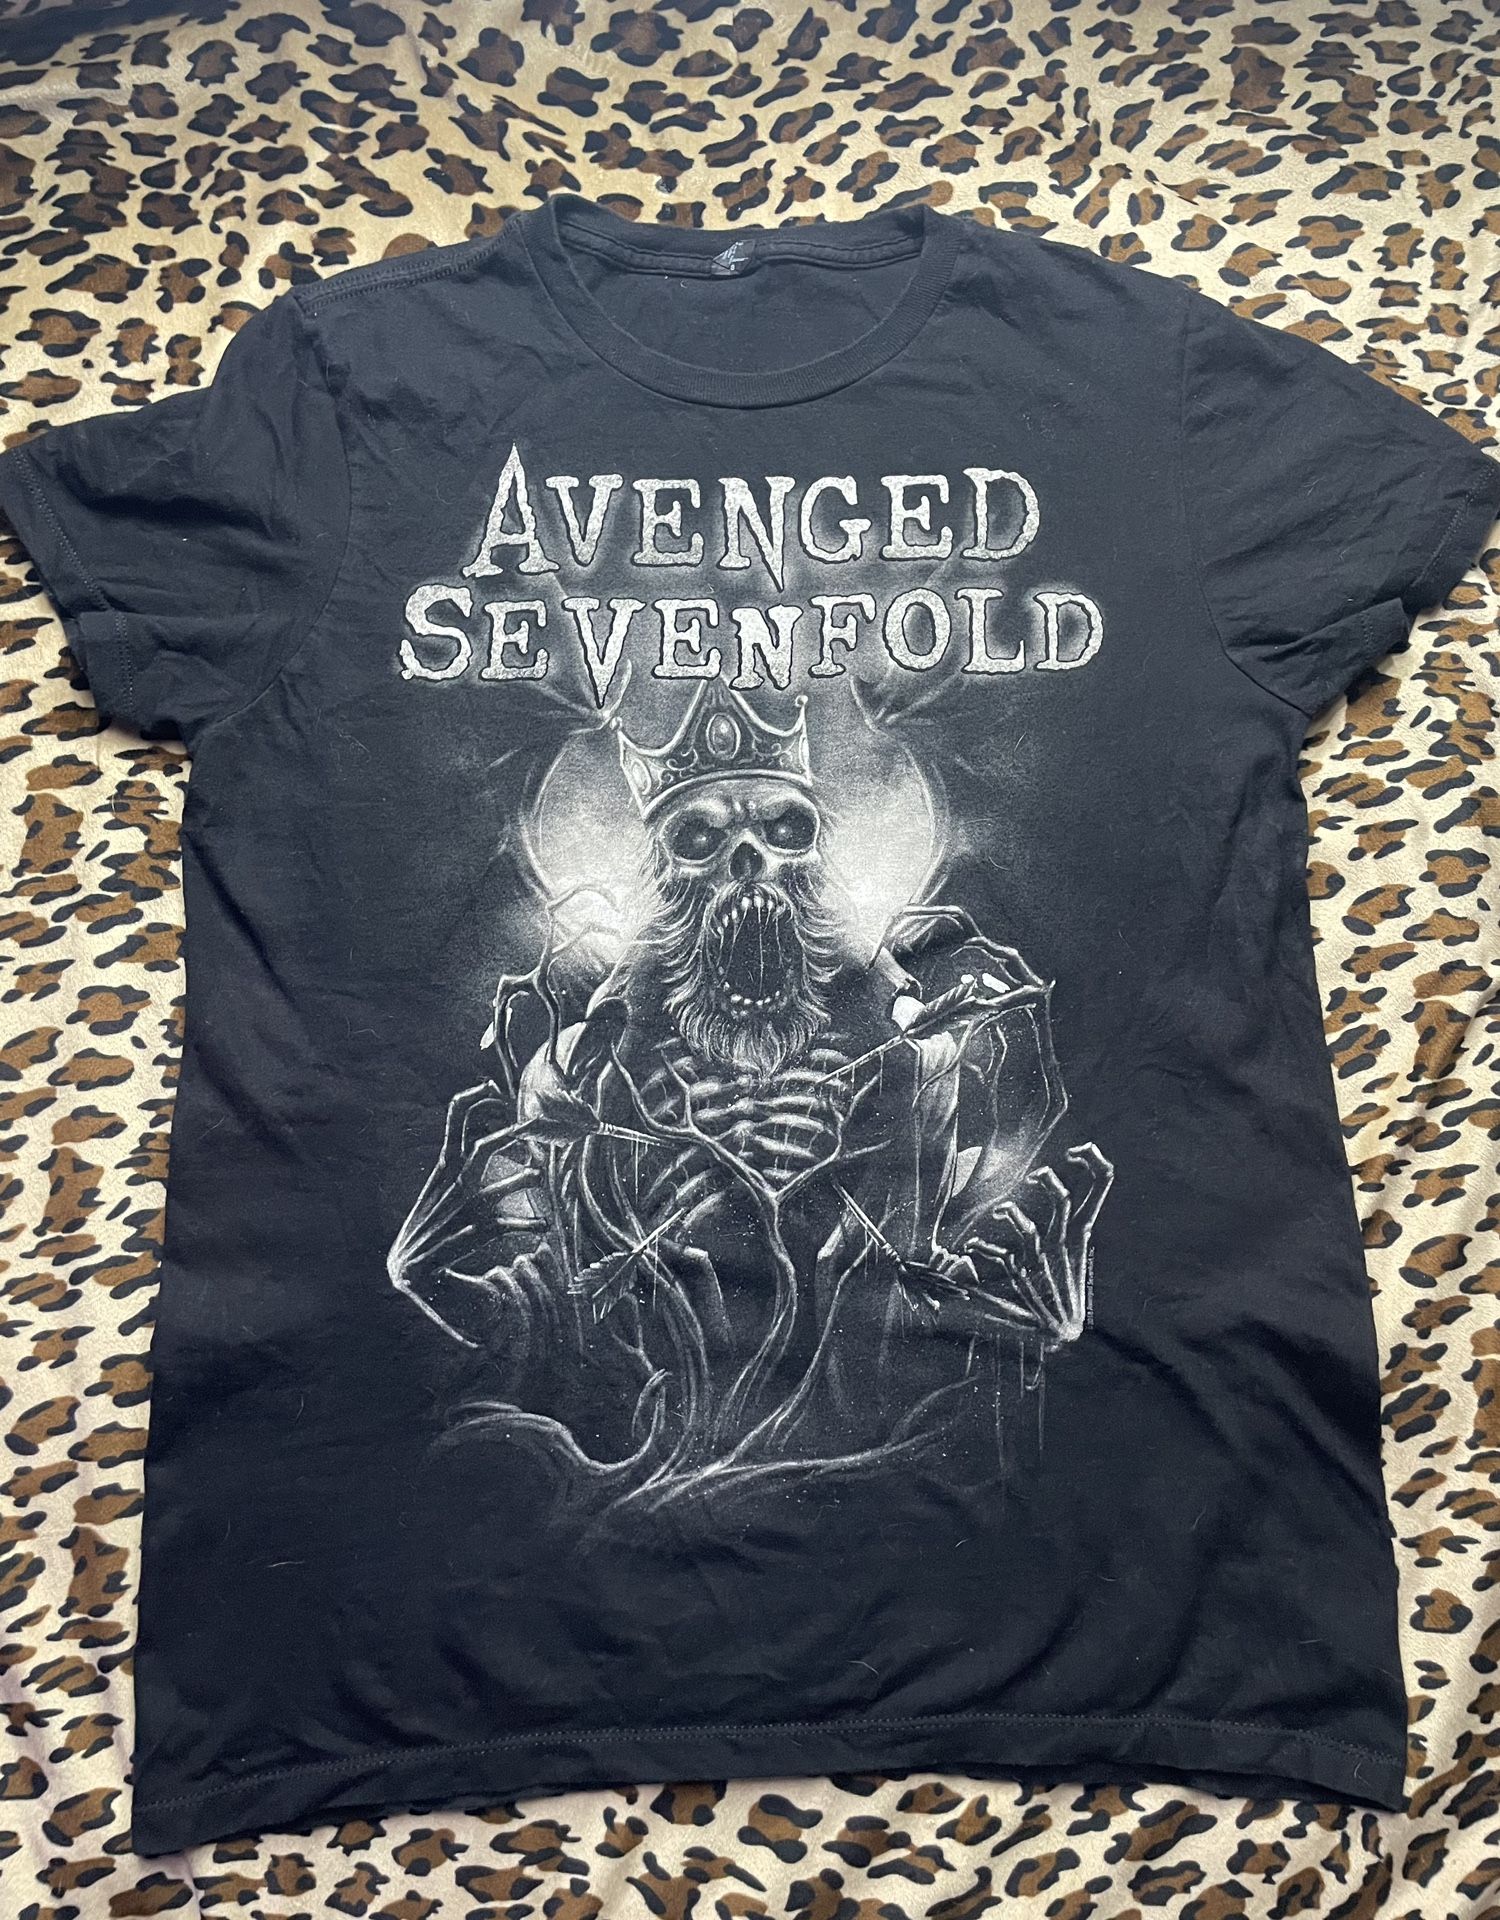 Avenged Sevenfold band tee